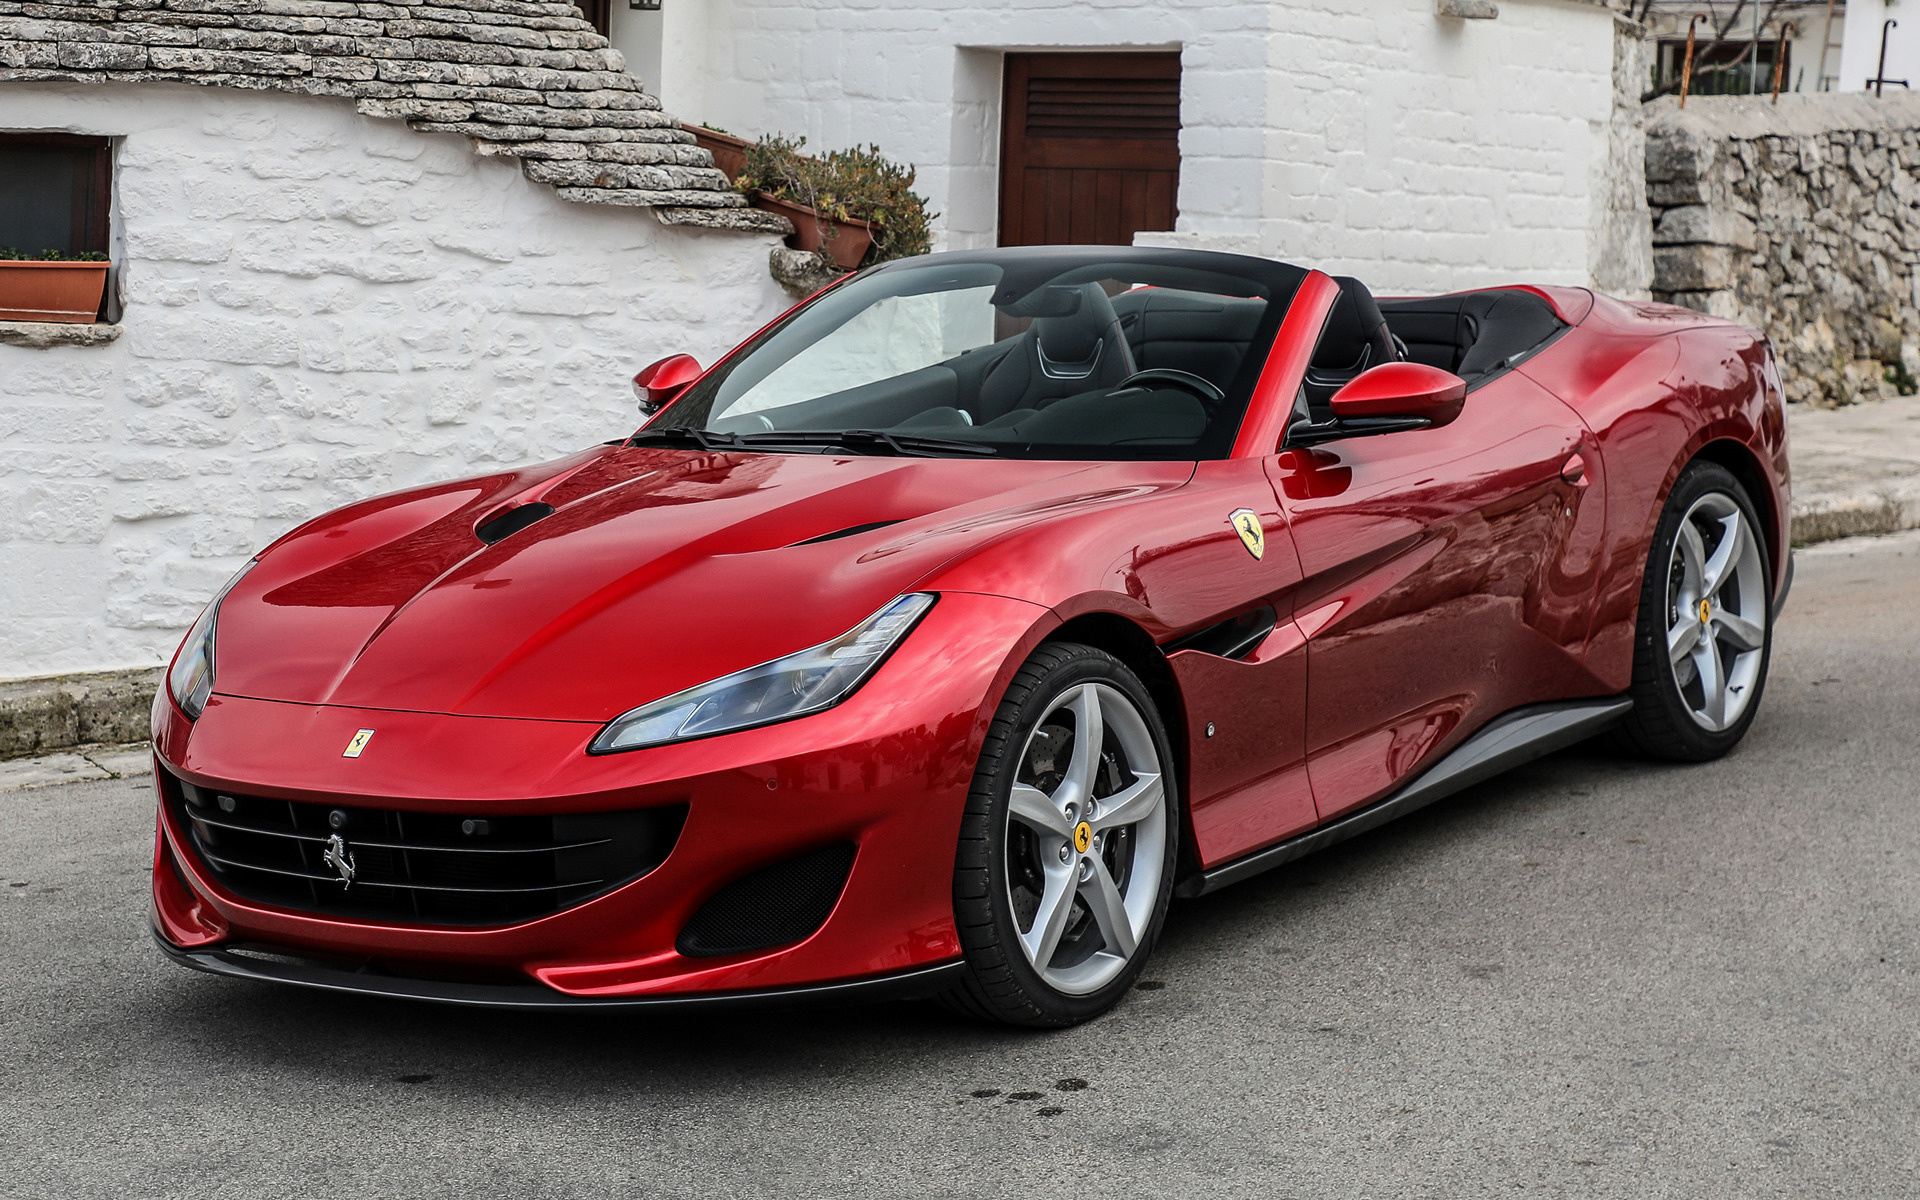 Ferrari Portofino M, 2018 model, Luxury car, Hd wallpapers, 1920x1200 HD Desktop